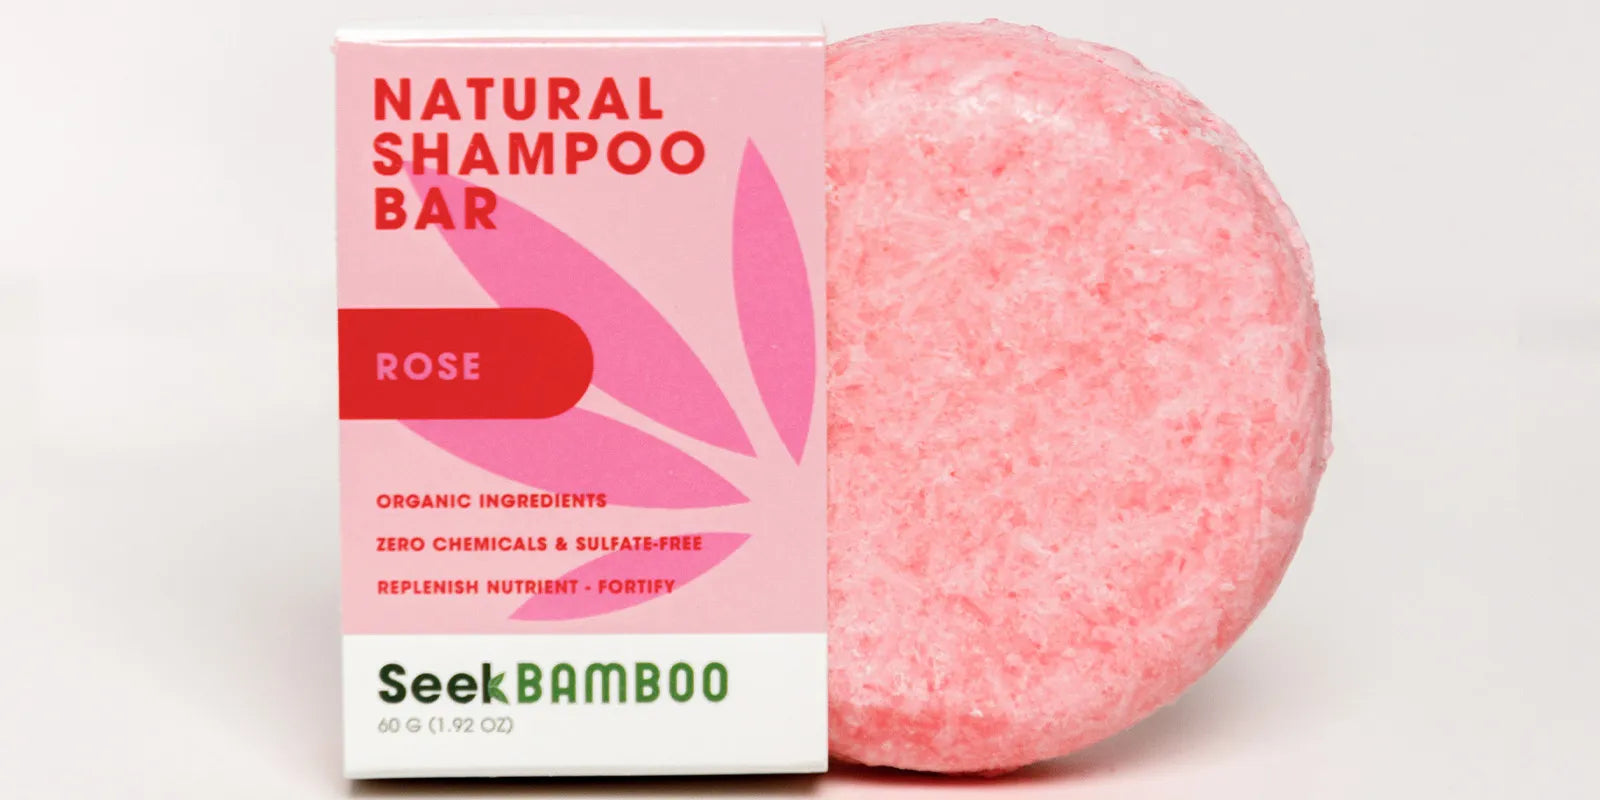 rose shampoo